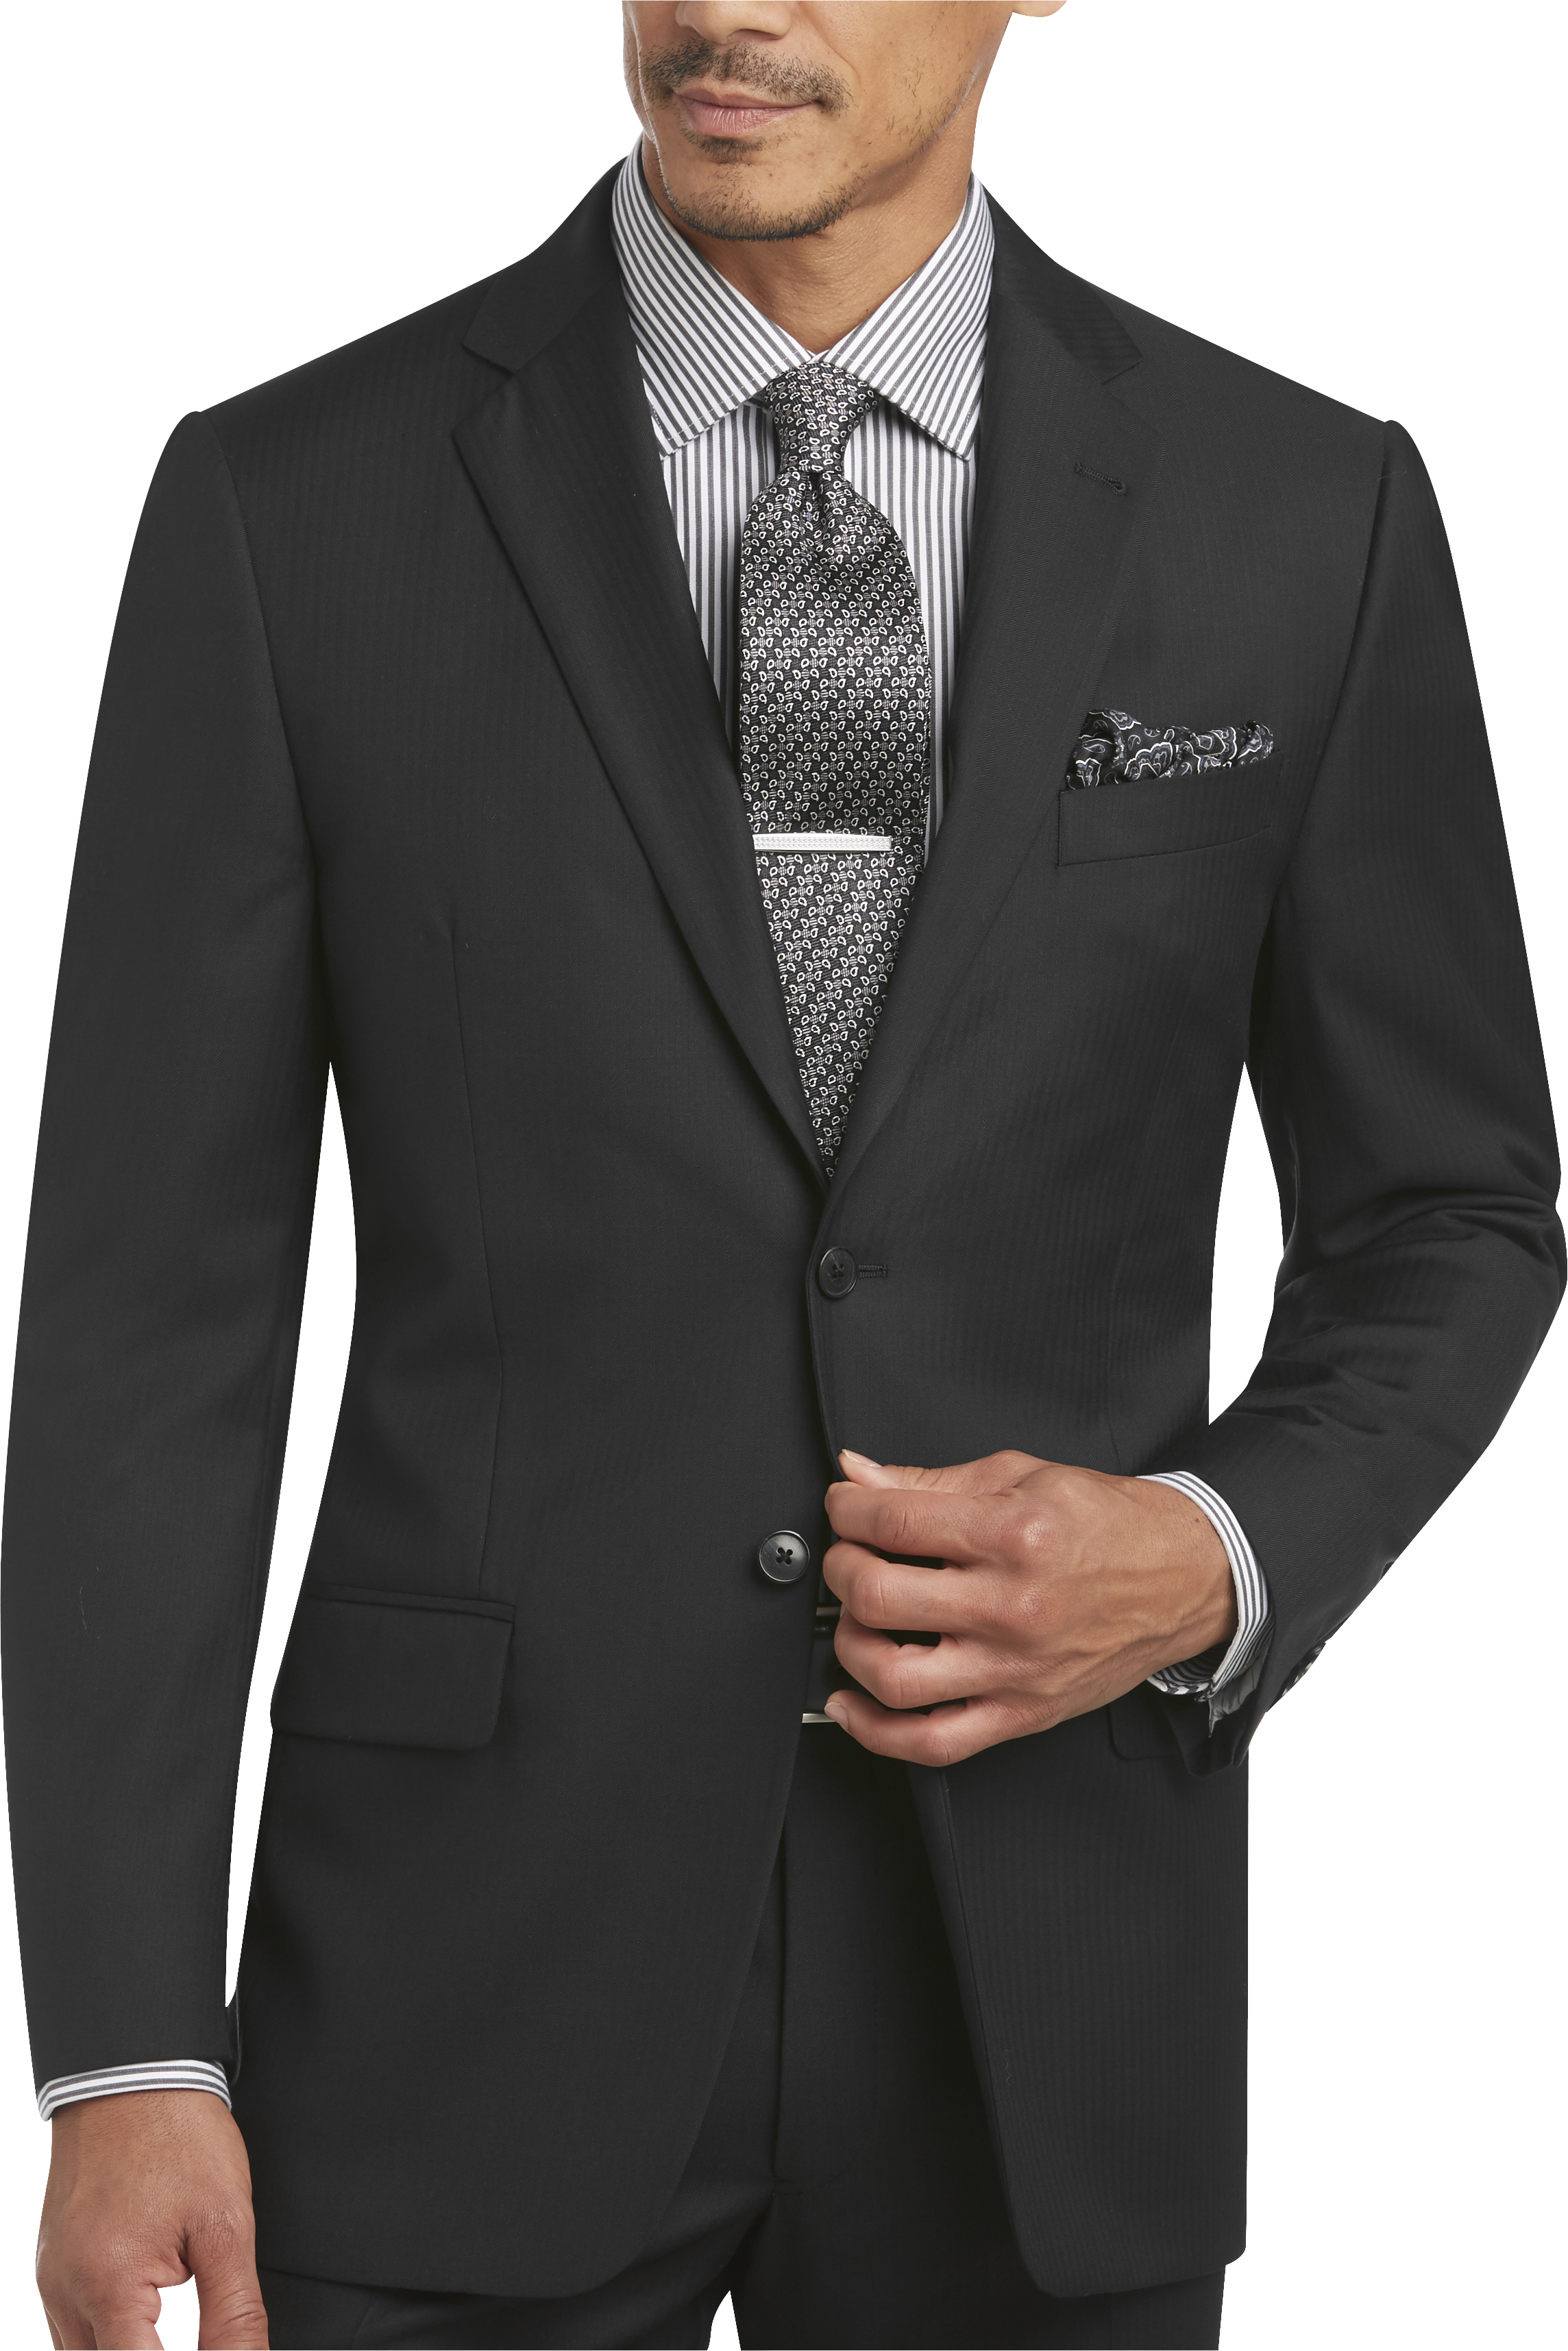 Joseph Abboud Black Herringbone Stripe Modern Fit Suit - Men's Suits ...